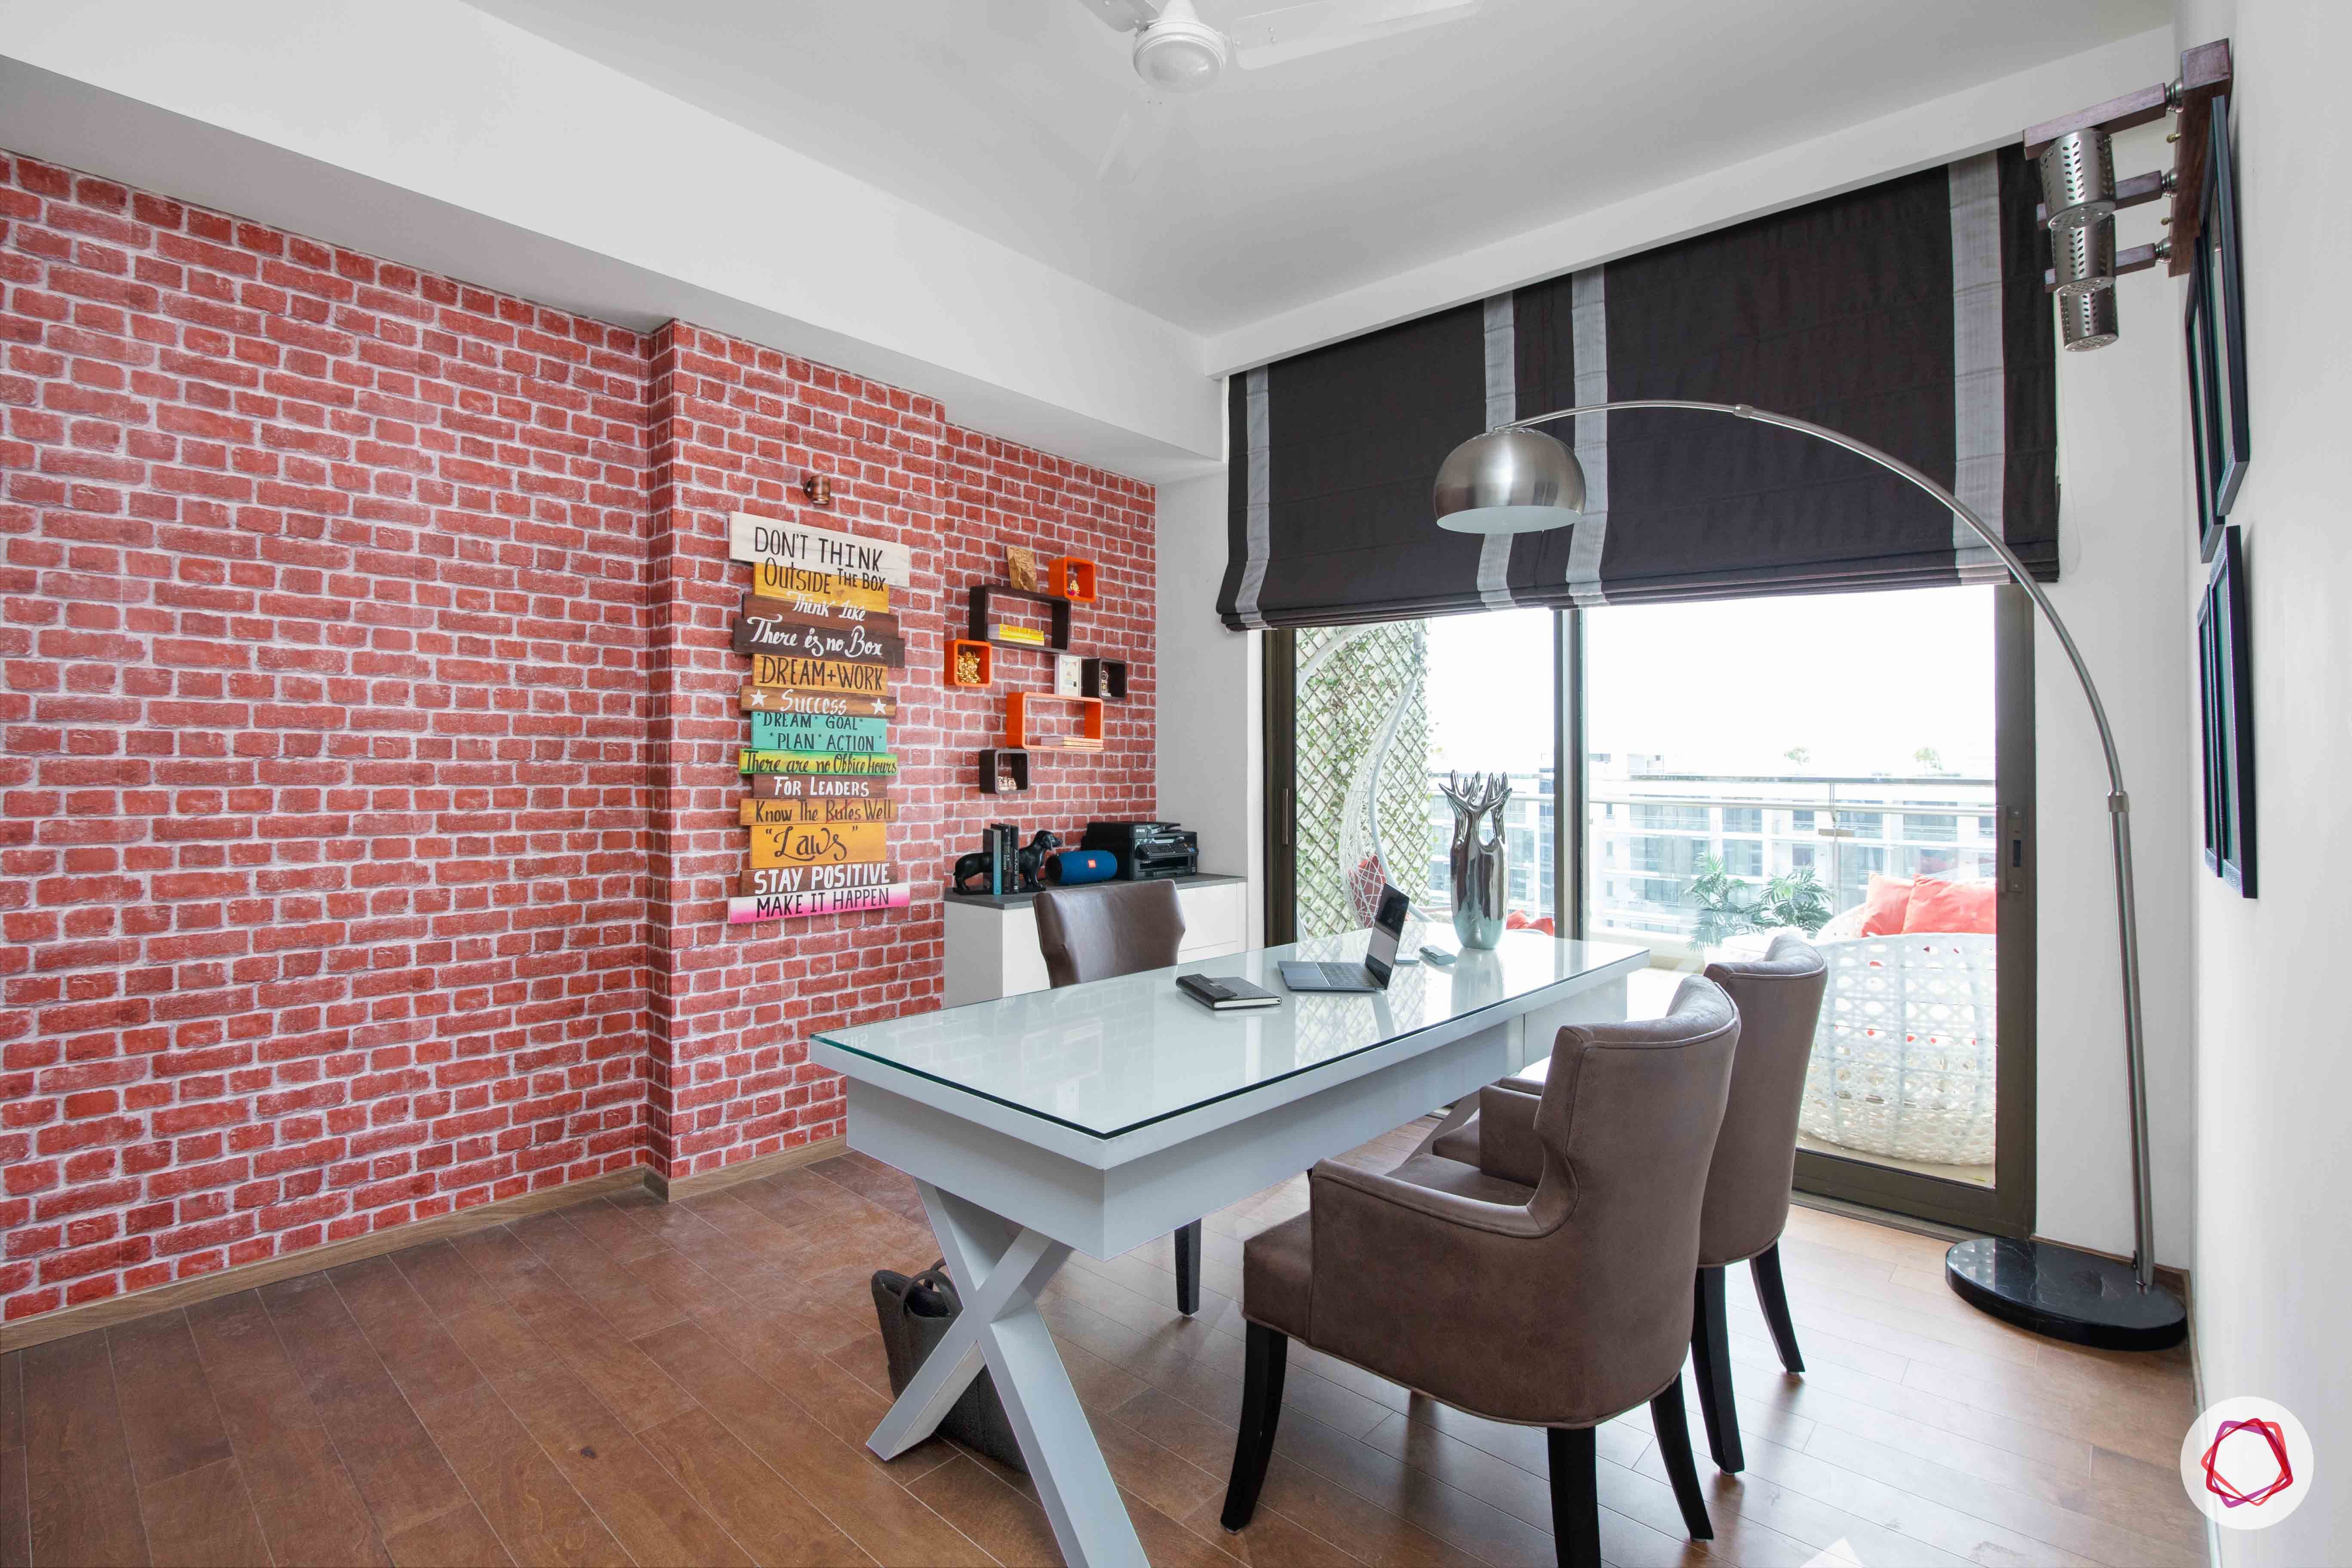 duplex house images-duplex house designs-exposed brick wall ideas-wallpaper ideas